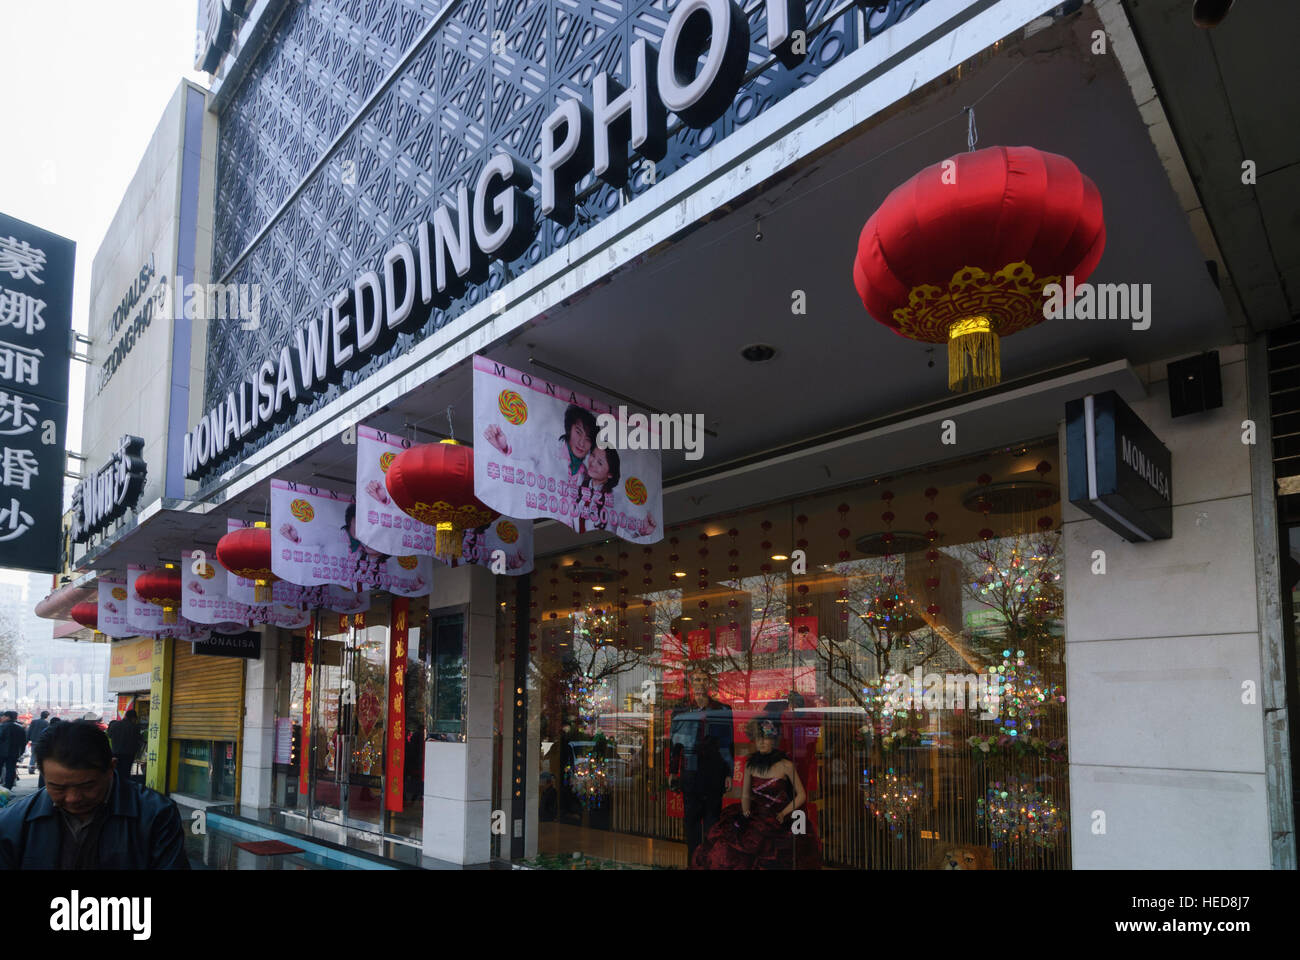 Lanzhou: Business shop for wedding photos, booming in China, Gansu, China Stock Photo